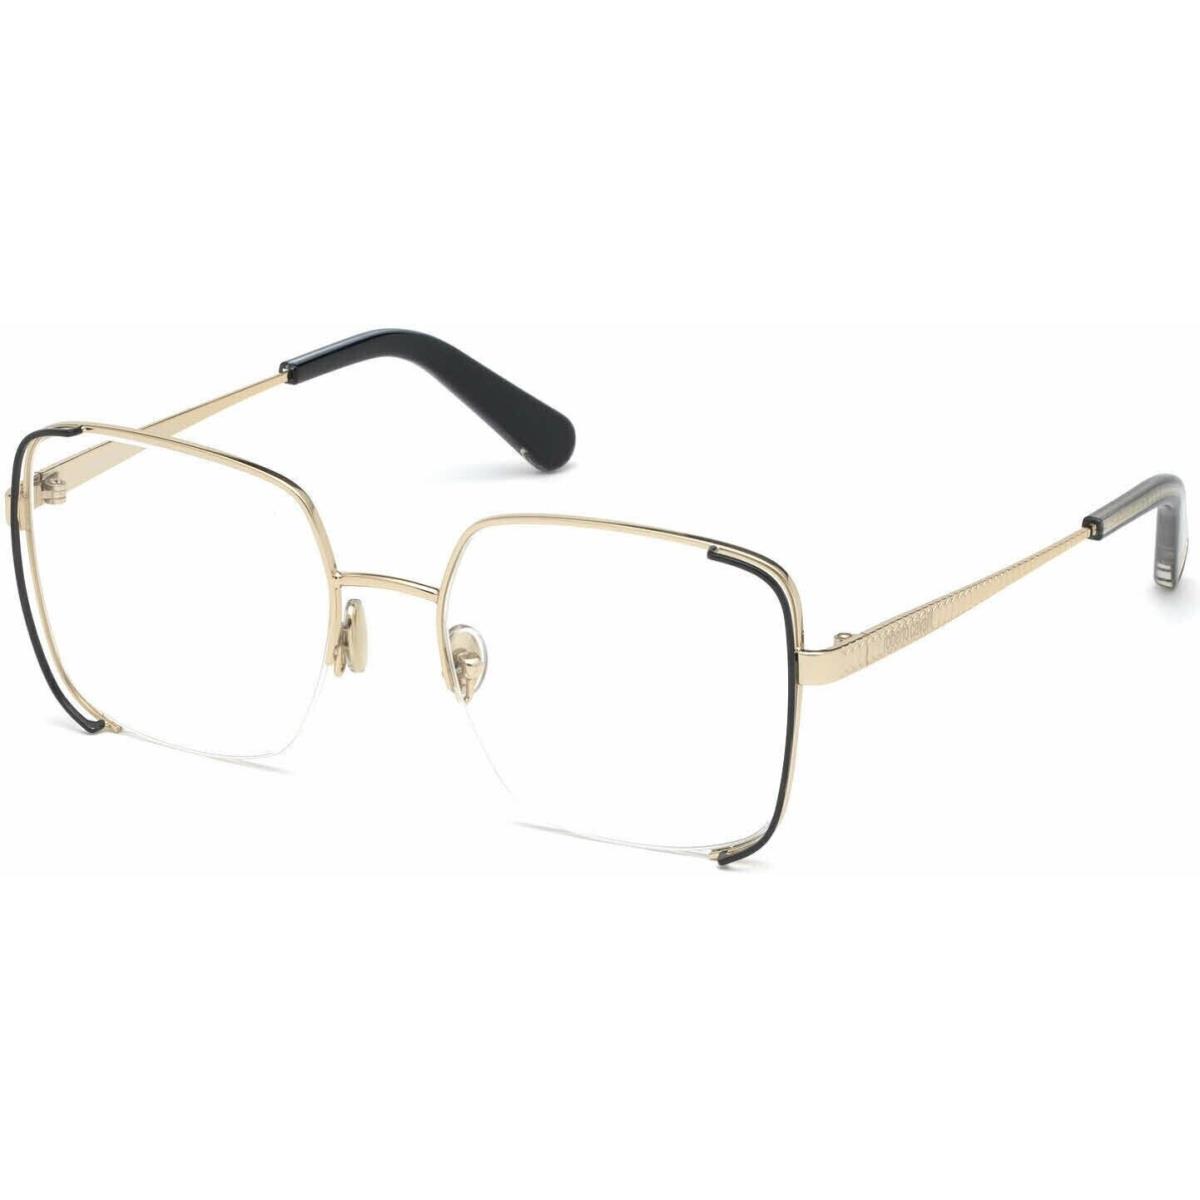 Roberto Cavalli Eyeglasses RC5085 032 Gold Black Full Rim Frame 53MM Rx-able